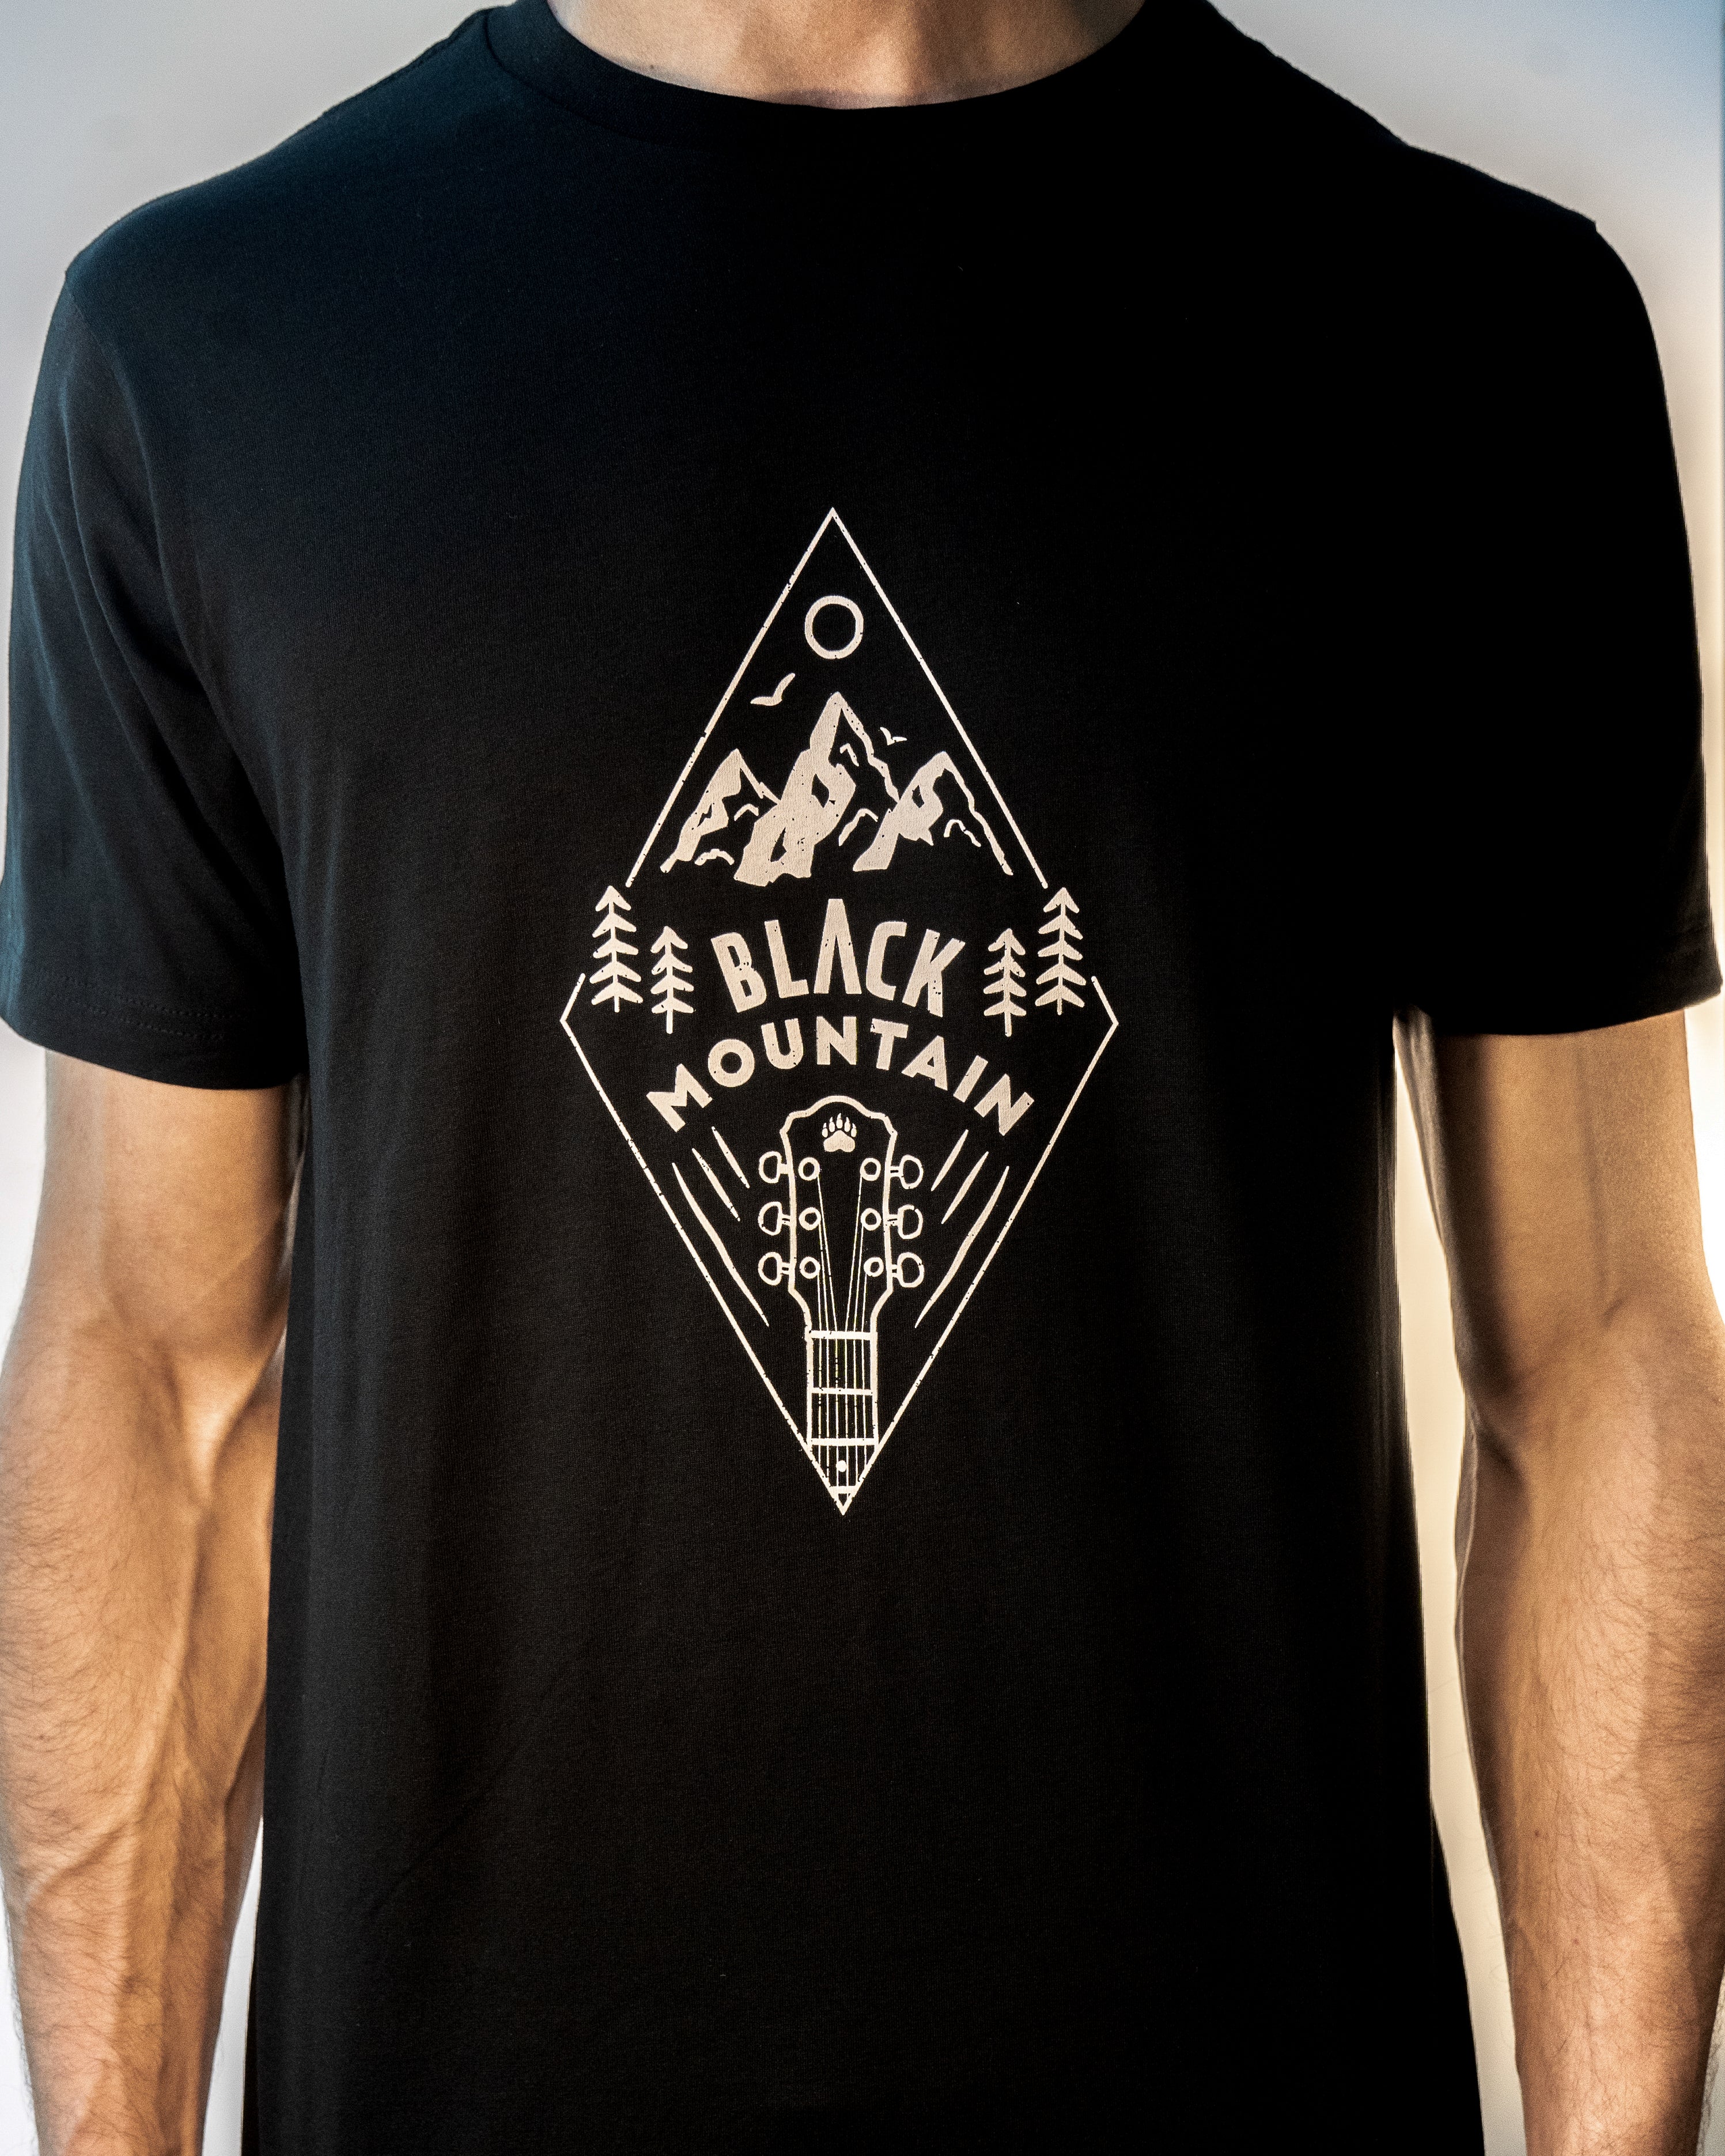 Black Mountain T-shirt